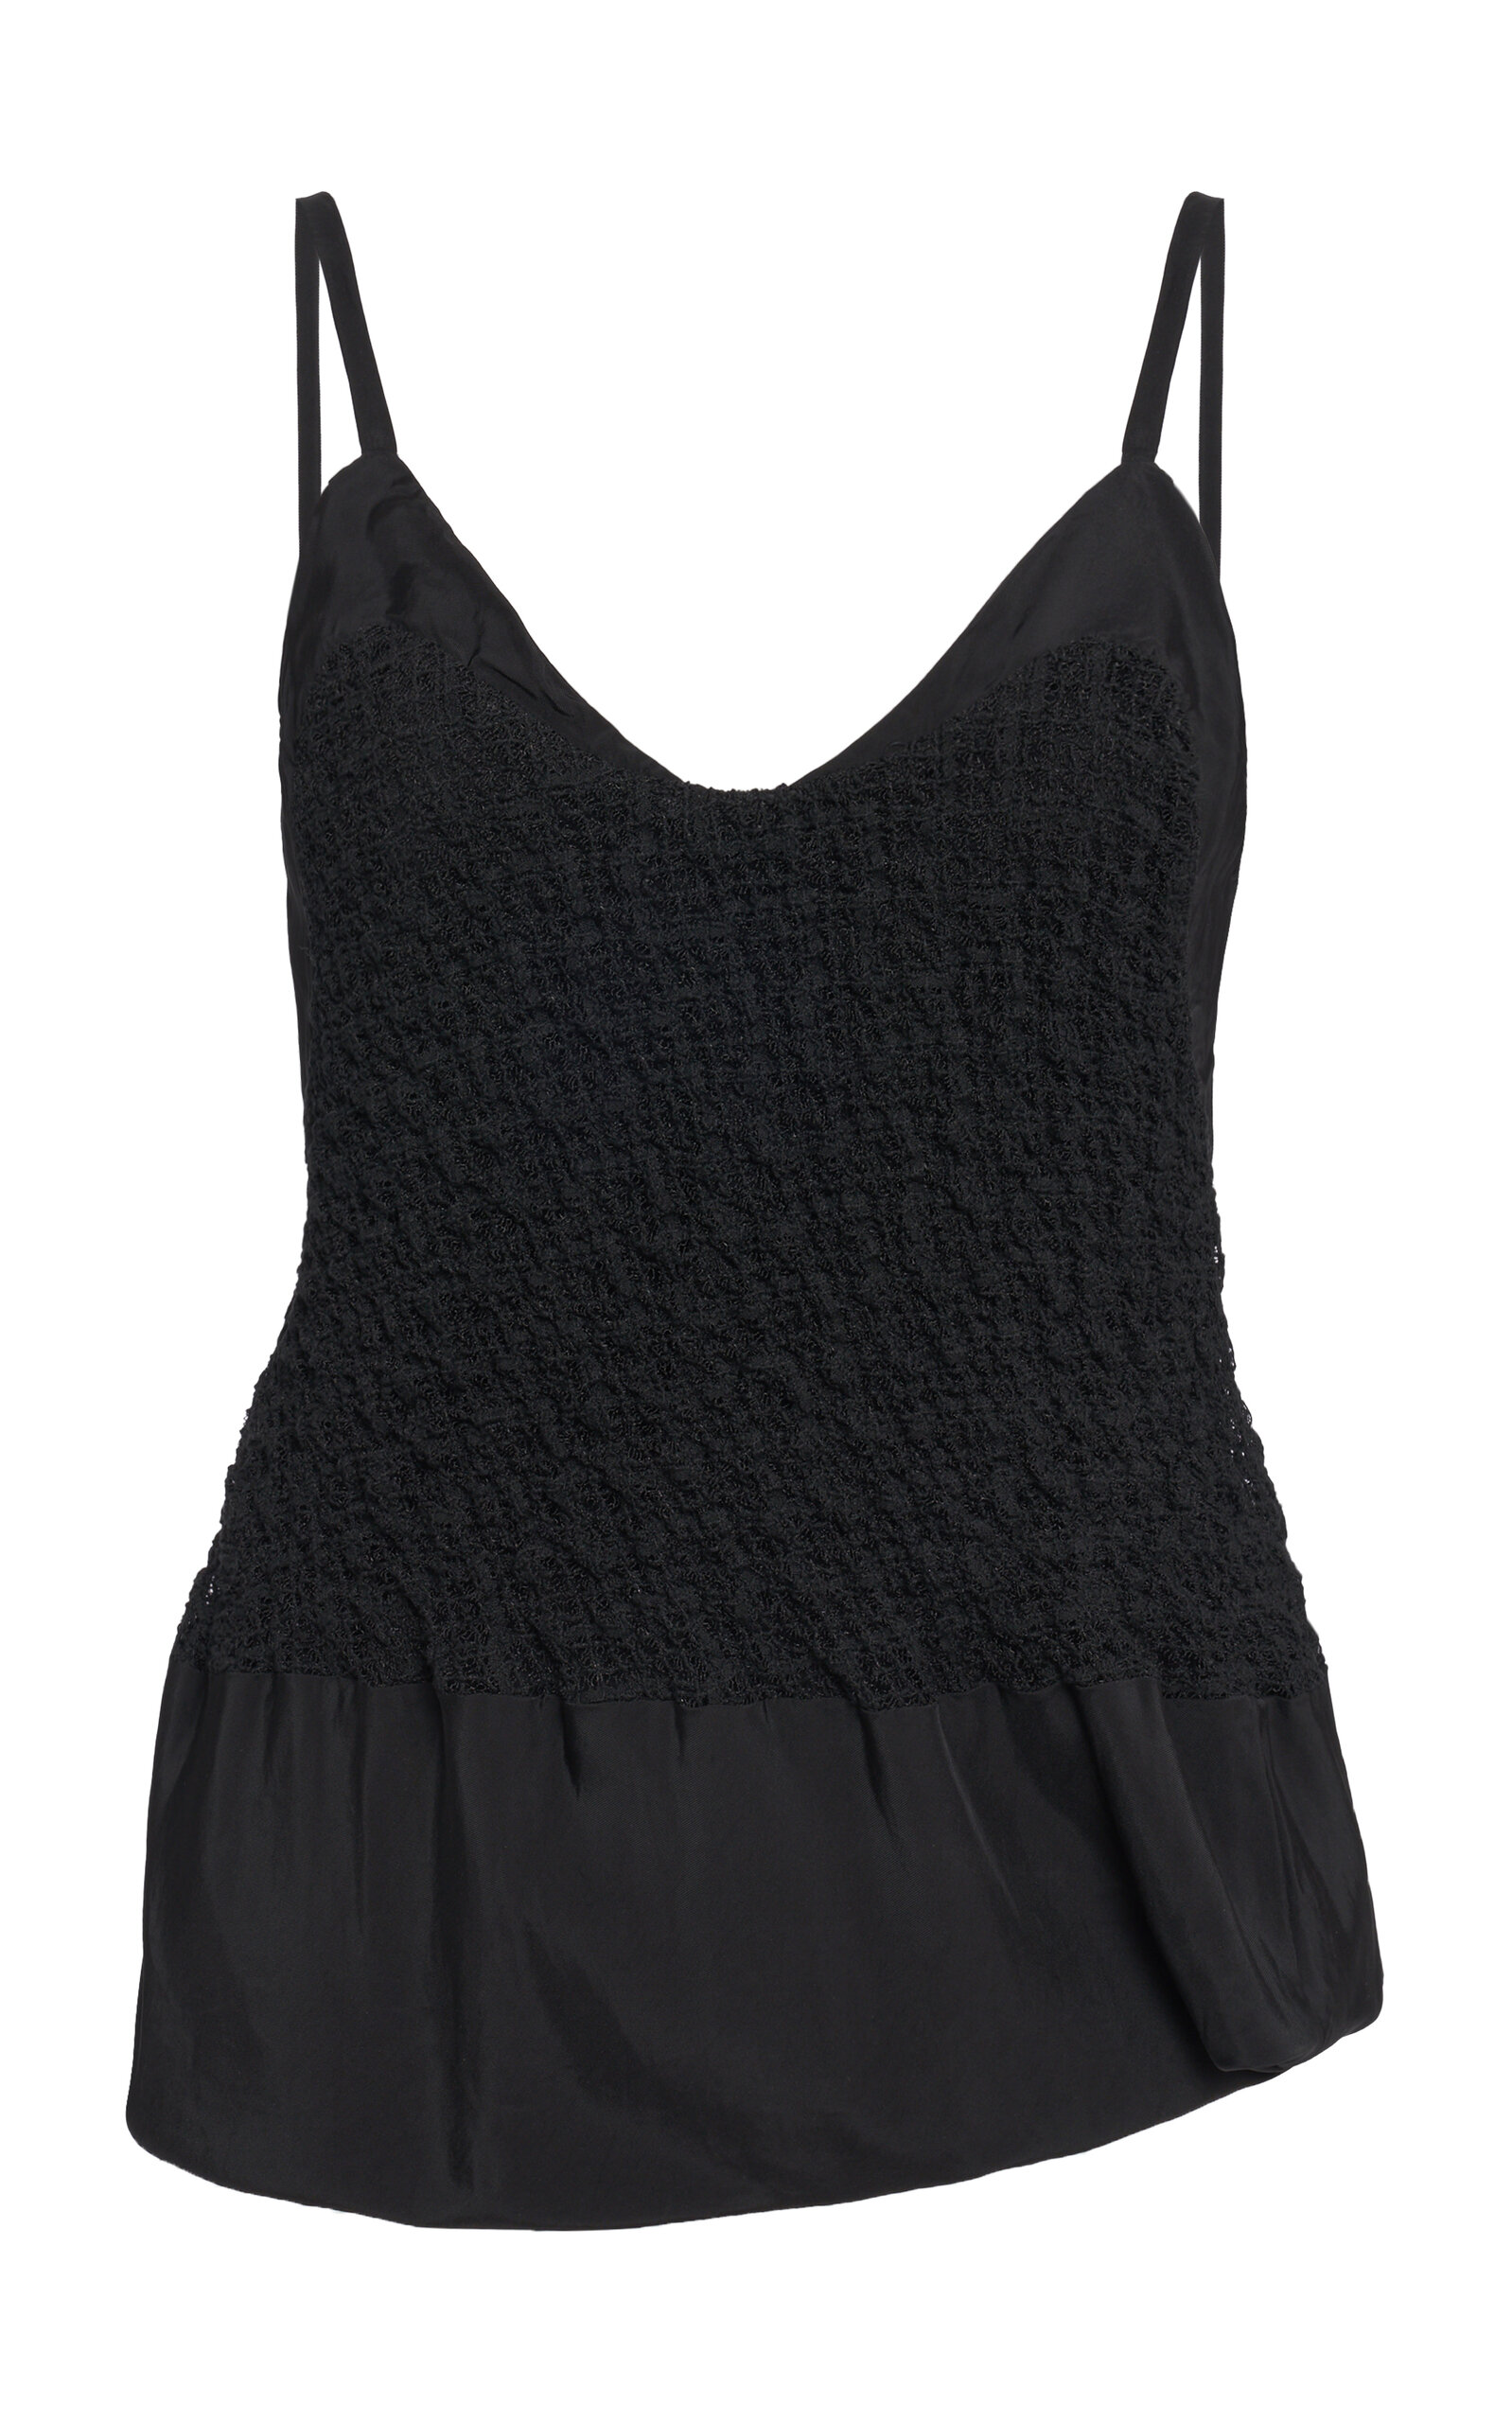 Jil Sander - Exclusive Textured Cotton-Blend Top - Black - DE 36 - Moda Operandi